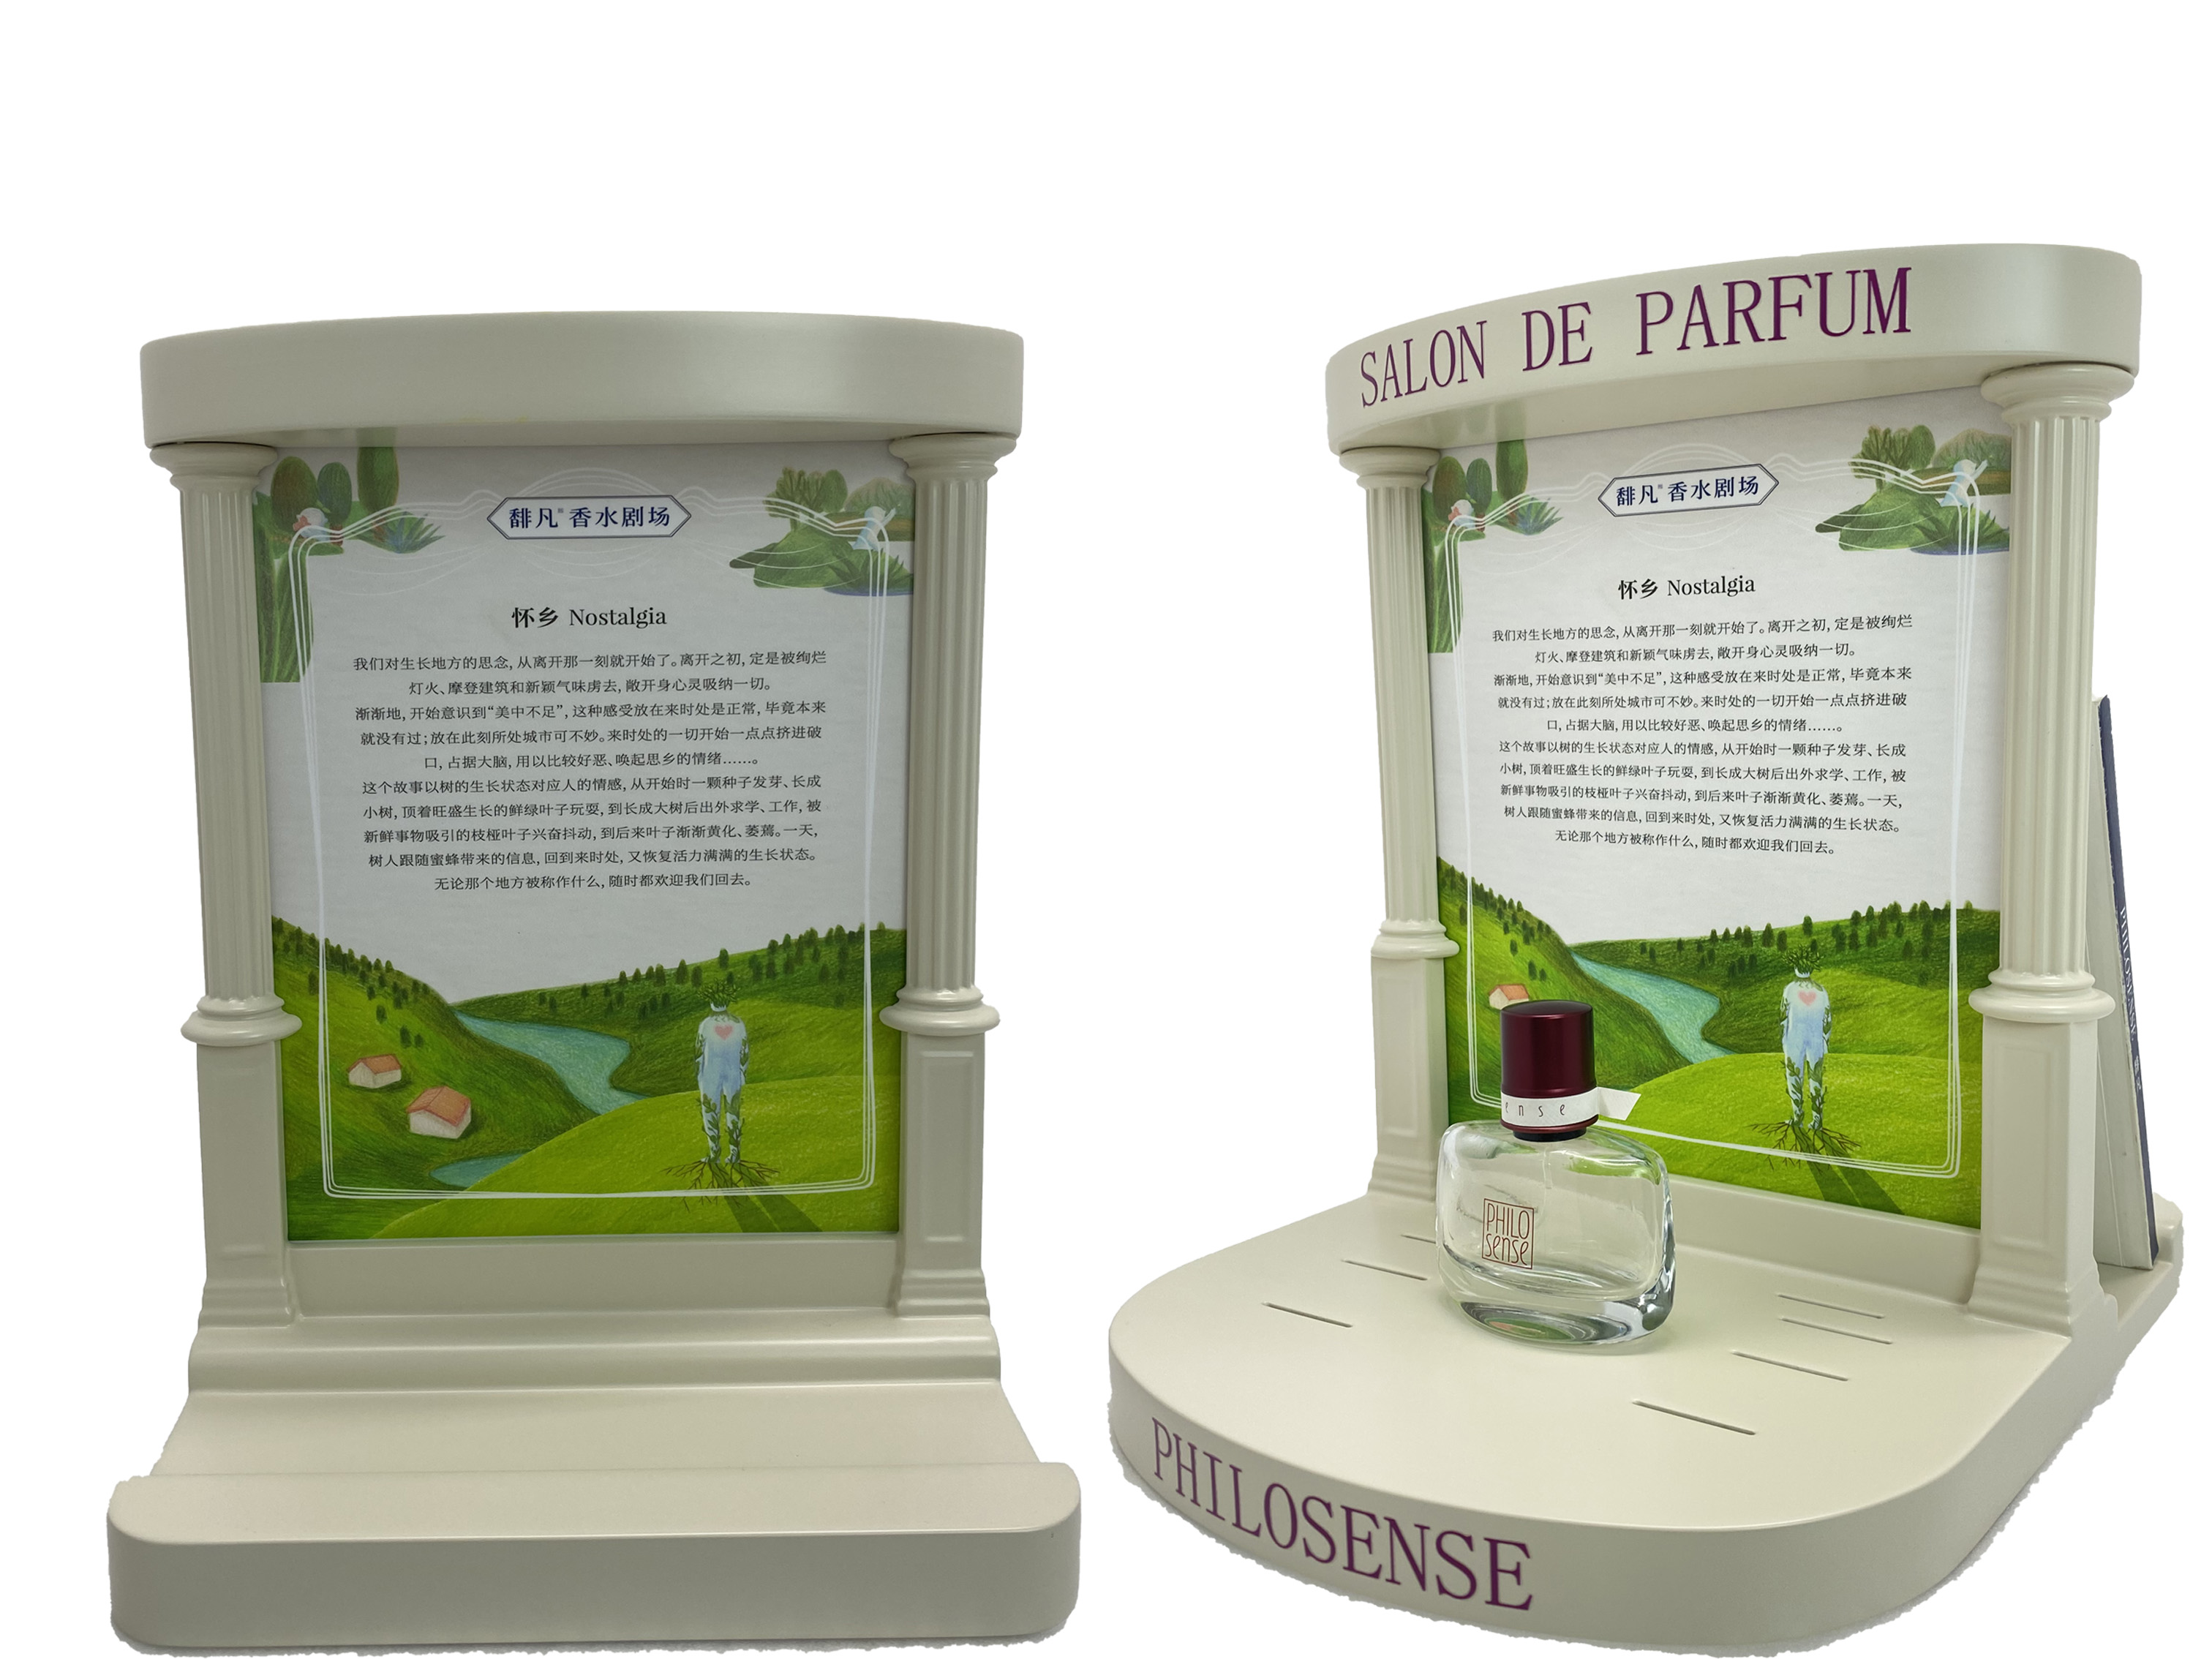 PHILOSENSE Perfume Display (3) 改